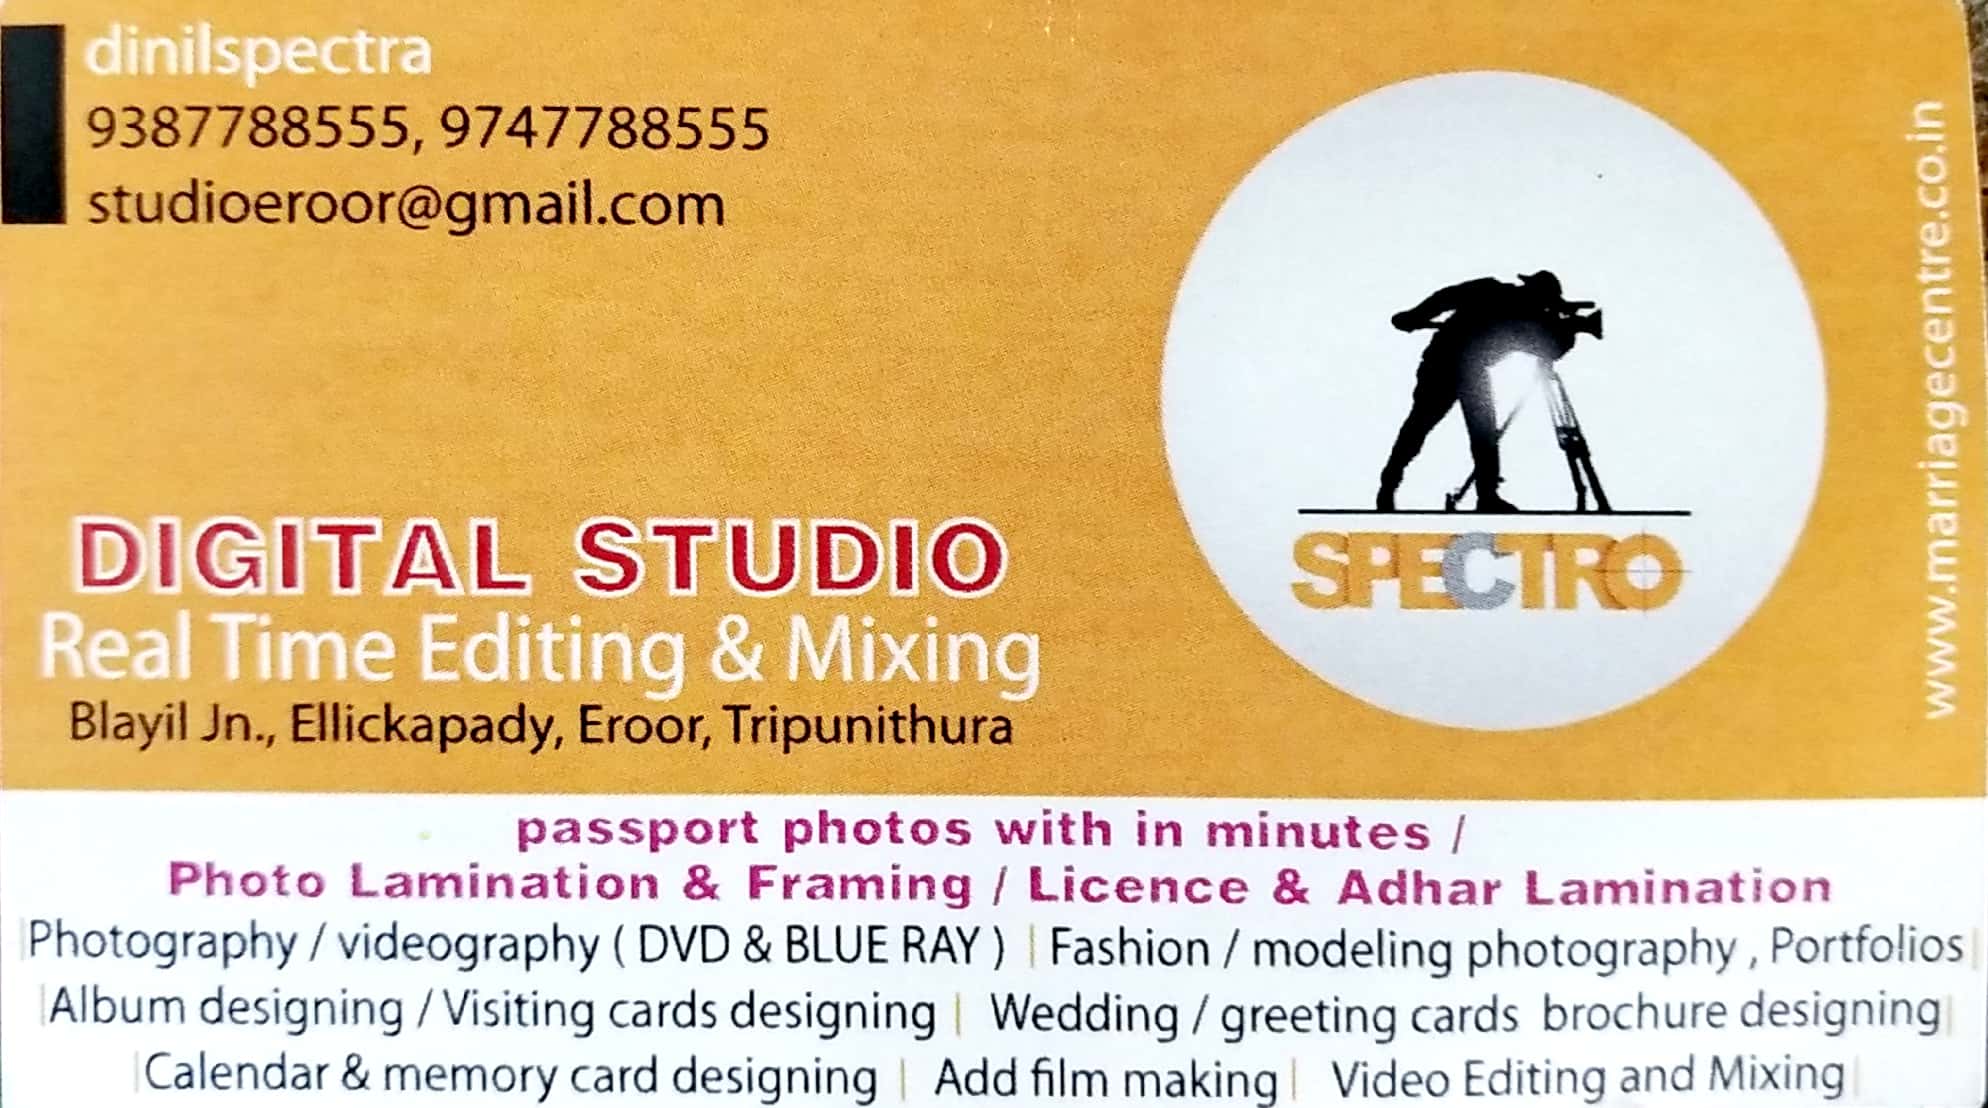 SPECTRO DIGITAL STUDIO, STUDIO & VIDEO EDITING,  service in Thrippunithura, Ernakulam